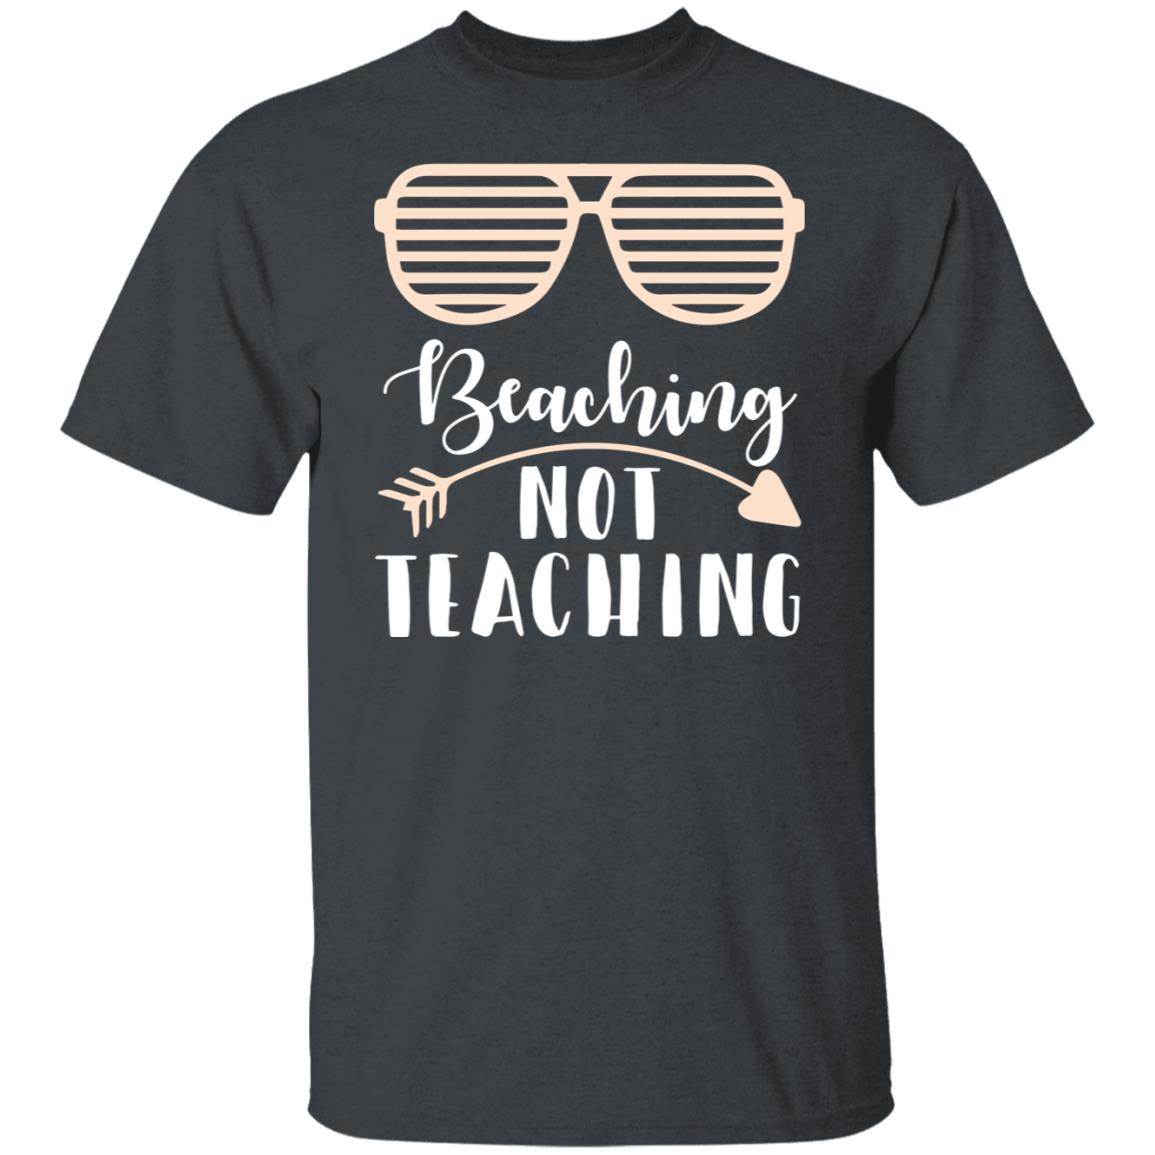 Breaching Not Teaching Funny Shirt